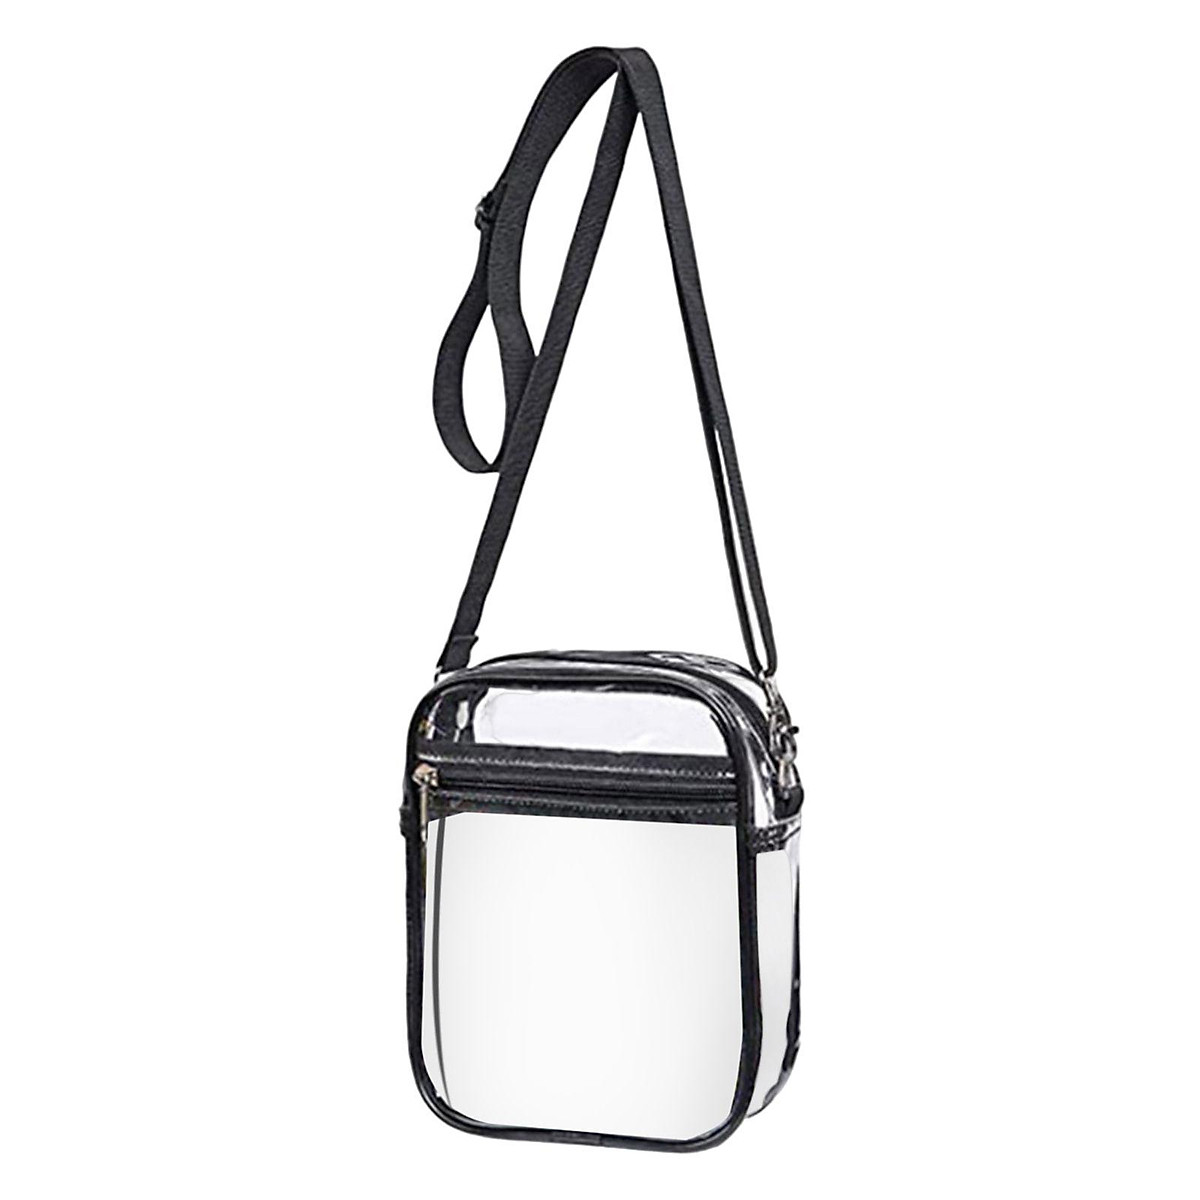 Share 151+ clear bag purse super hot